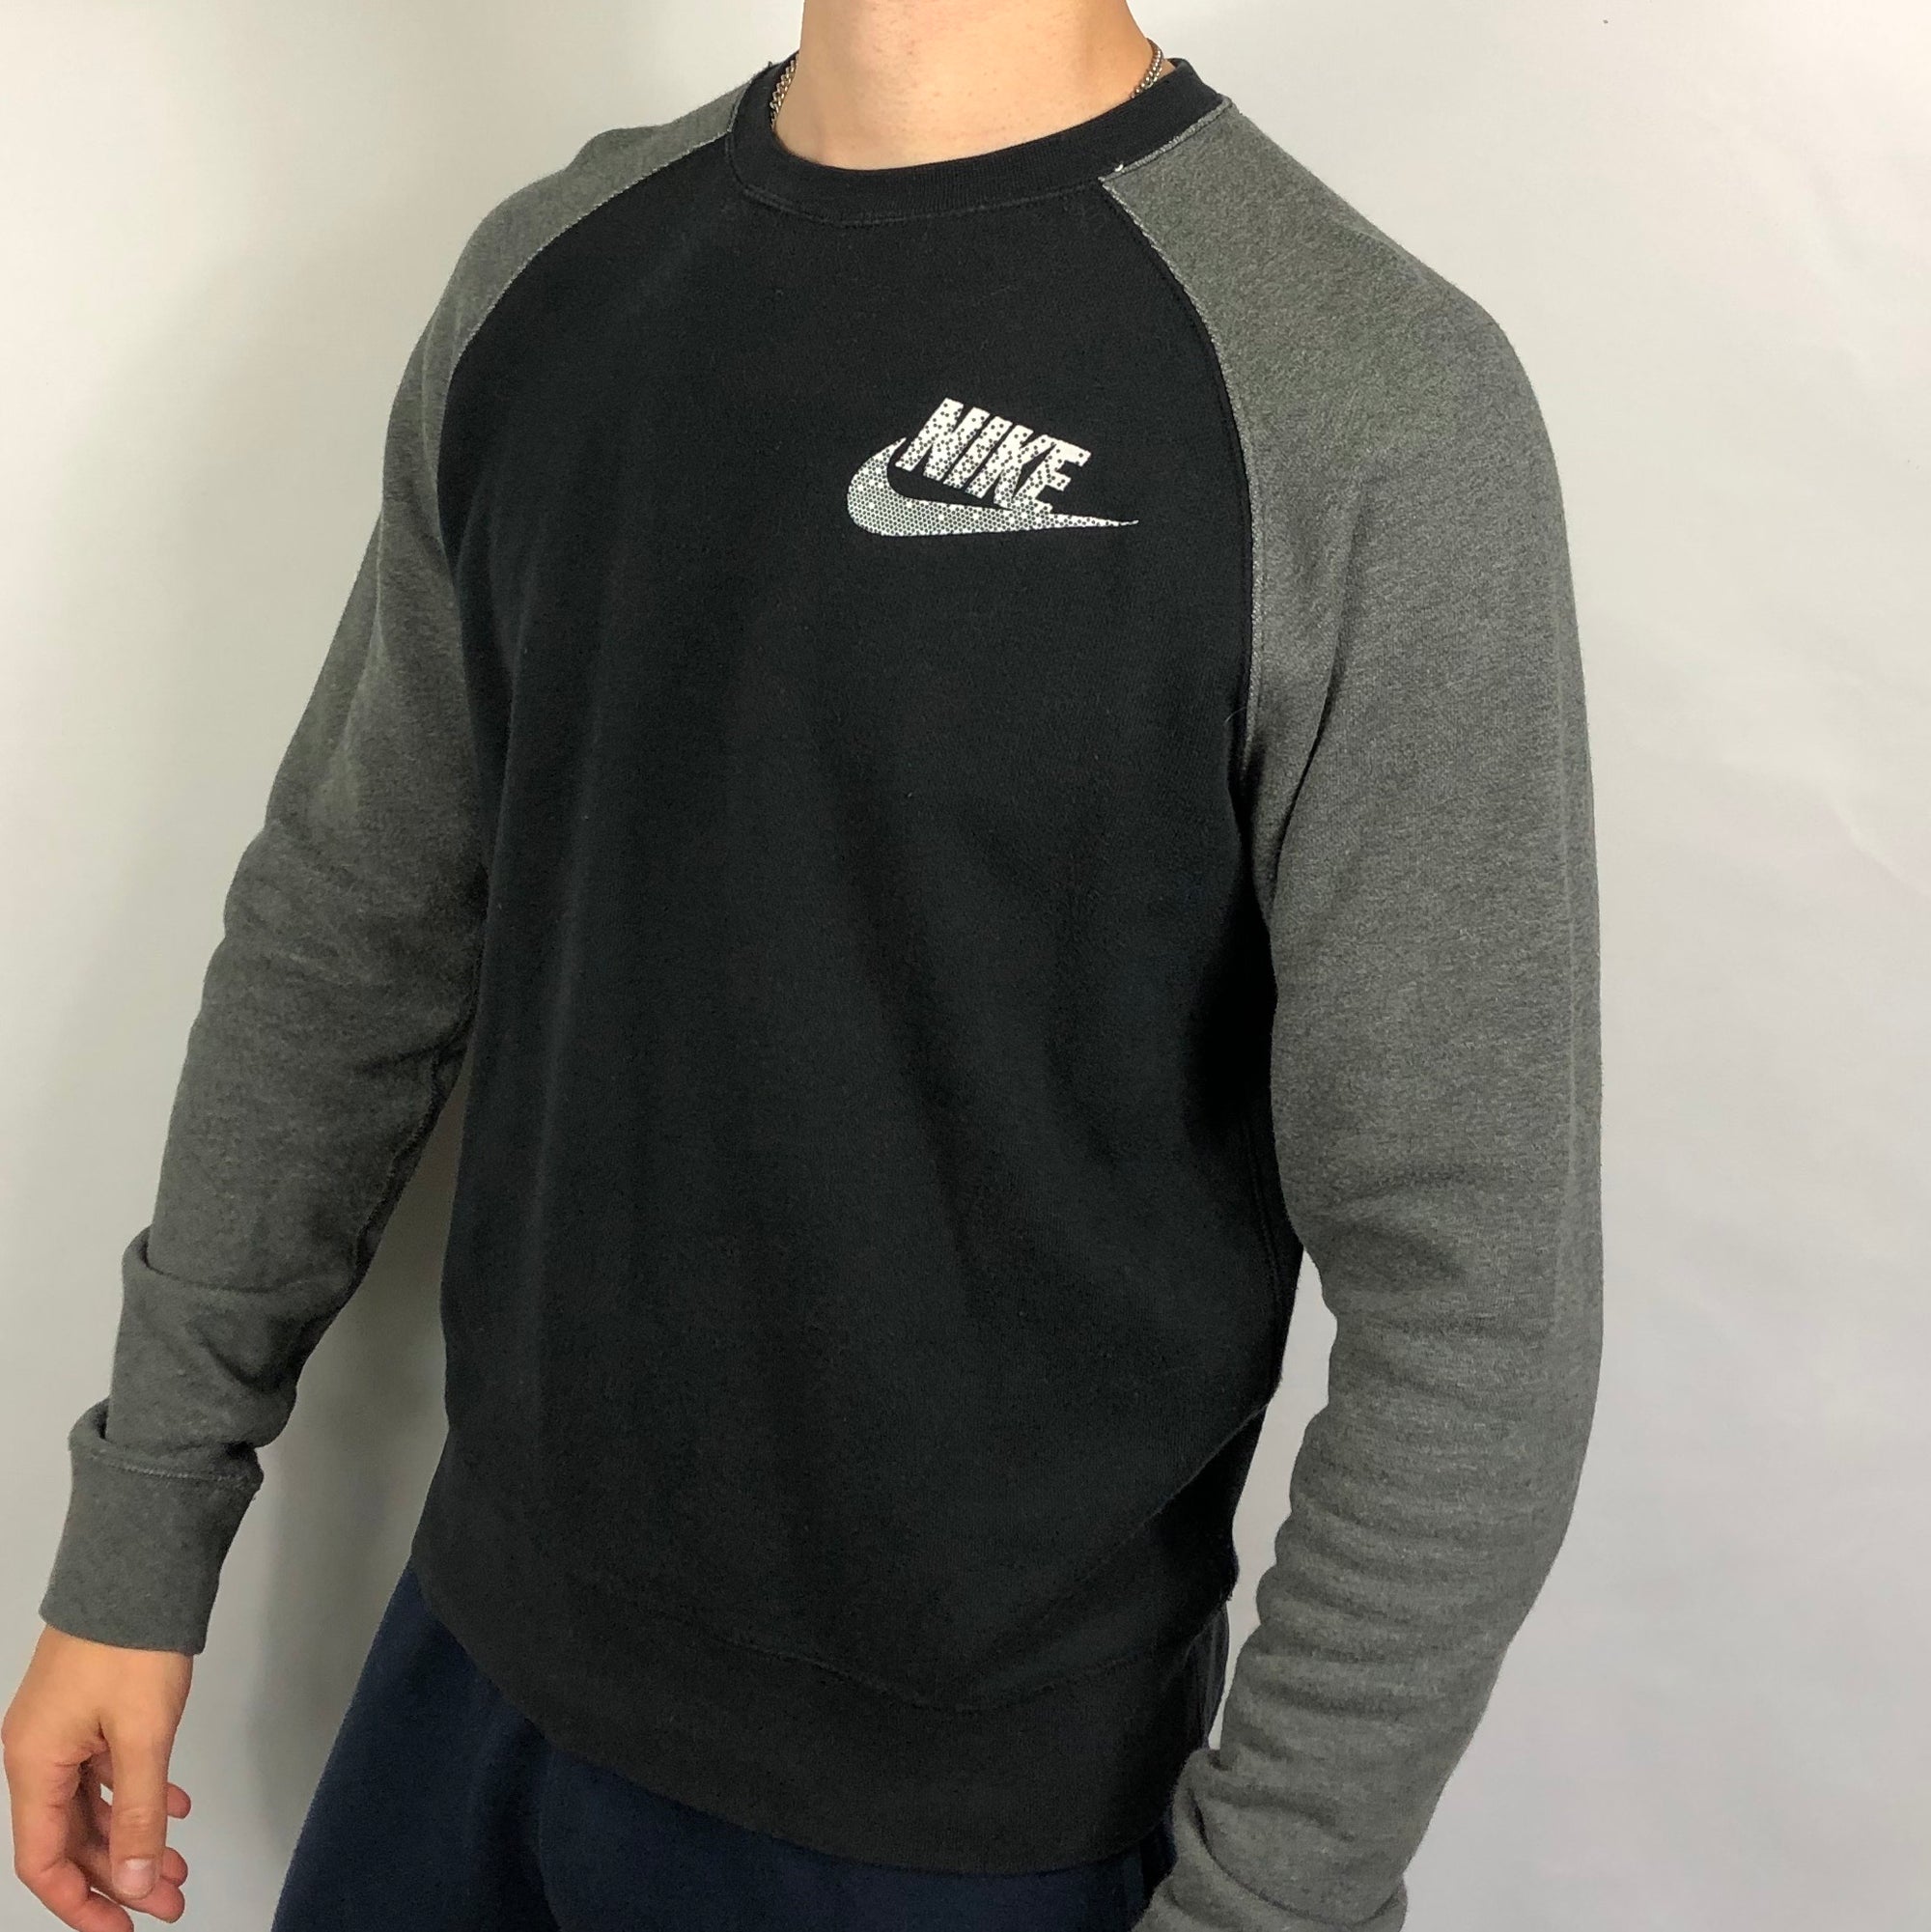 Nike Sweatshirt in Grey & Black - Medium